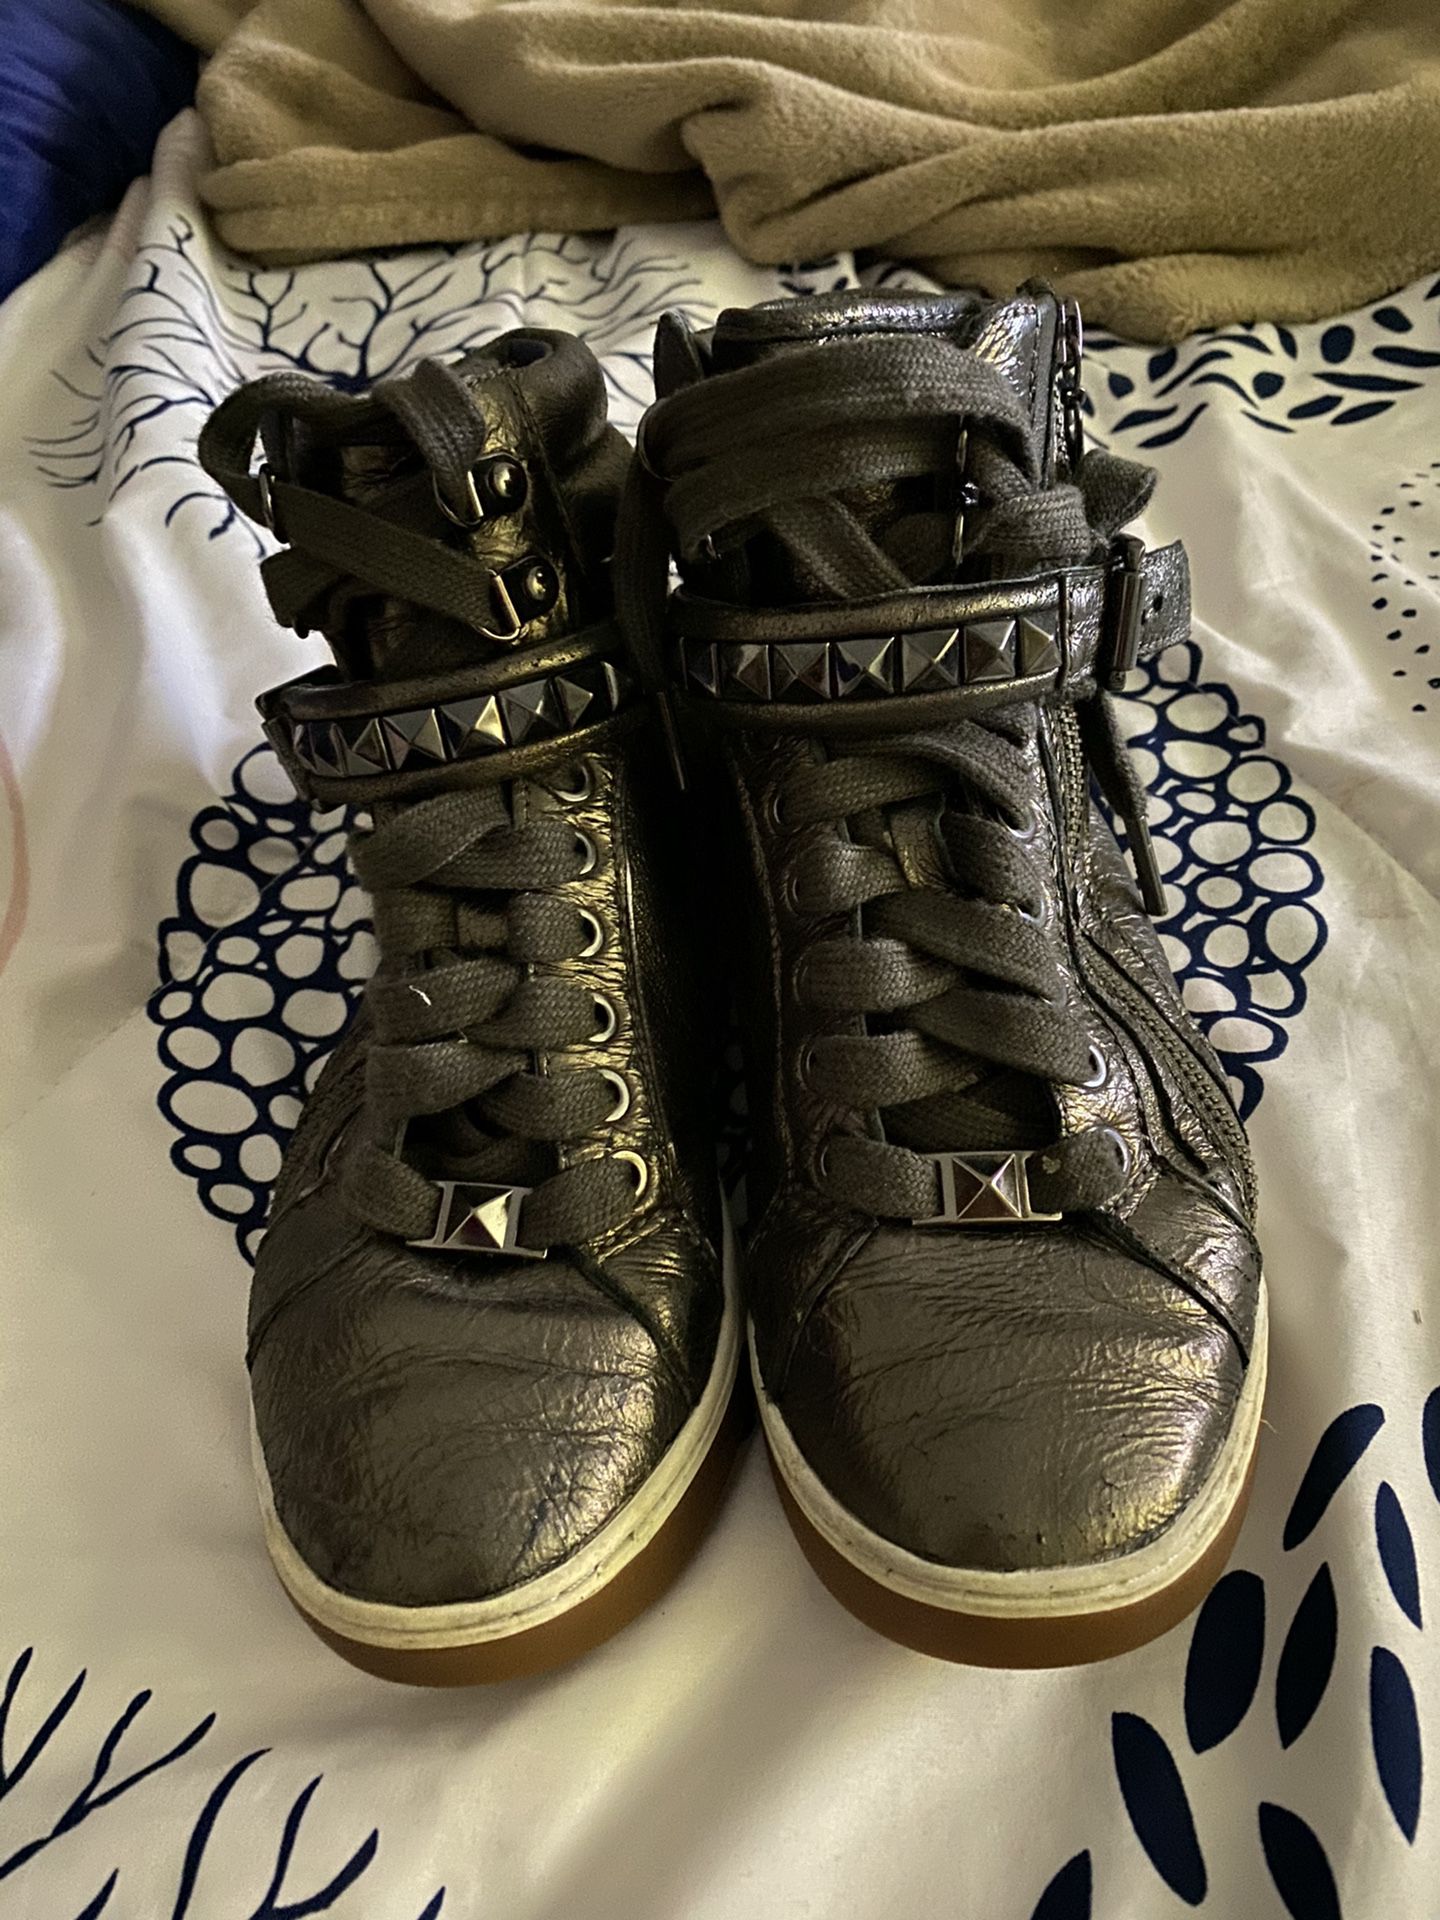 Michael Kors sneakers 👟 size 6